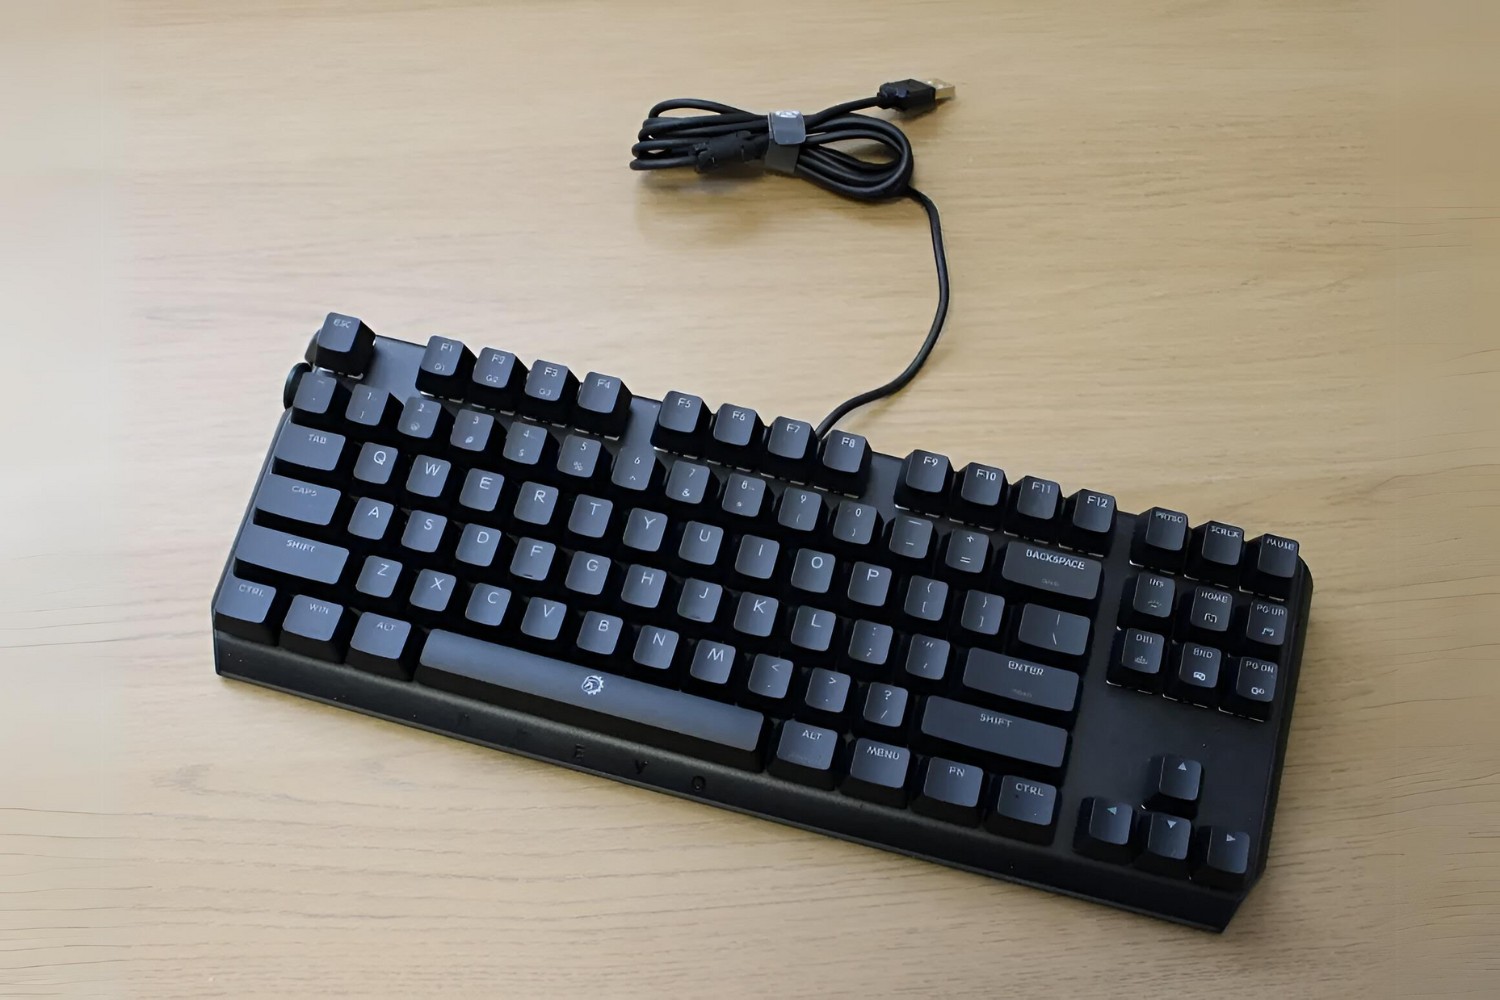 How Do I Turn Off The Numbers On A Drevo Mechanical Keyboard?